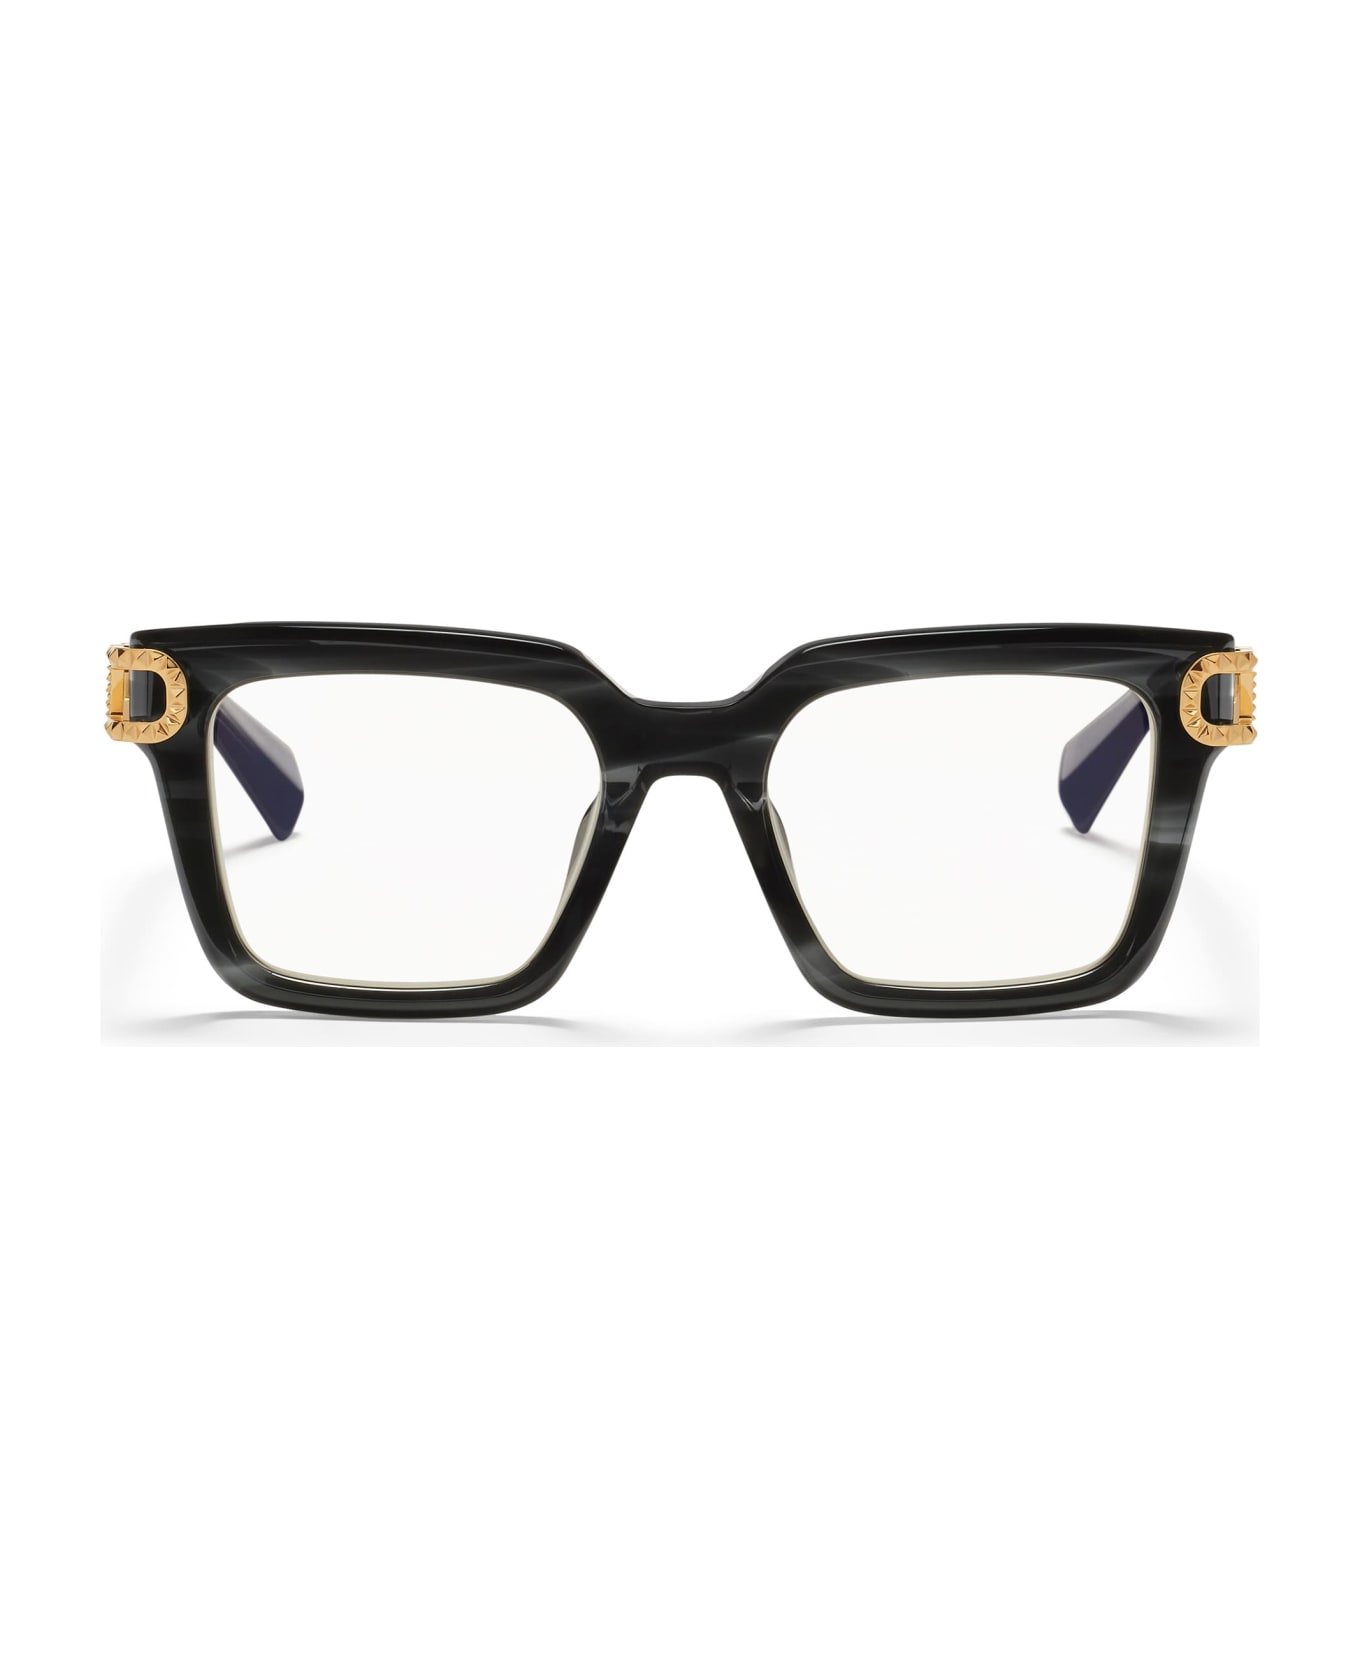 Valentino Eyewear V-side - Black Swirl / Light Gold Glasses - Black